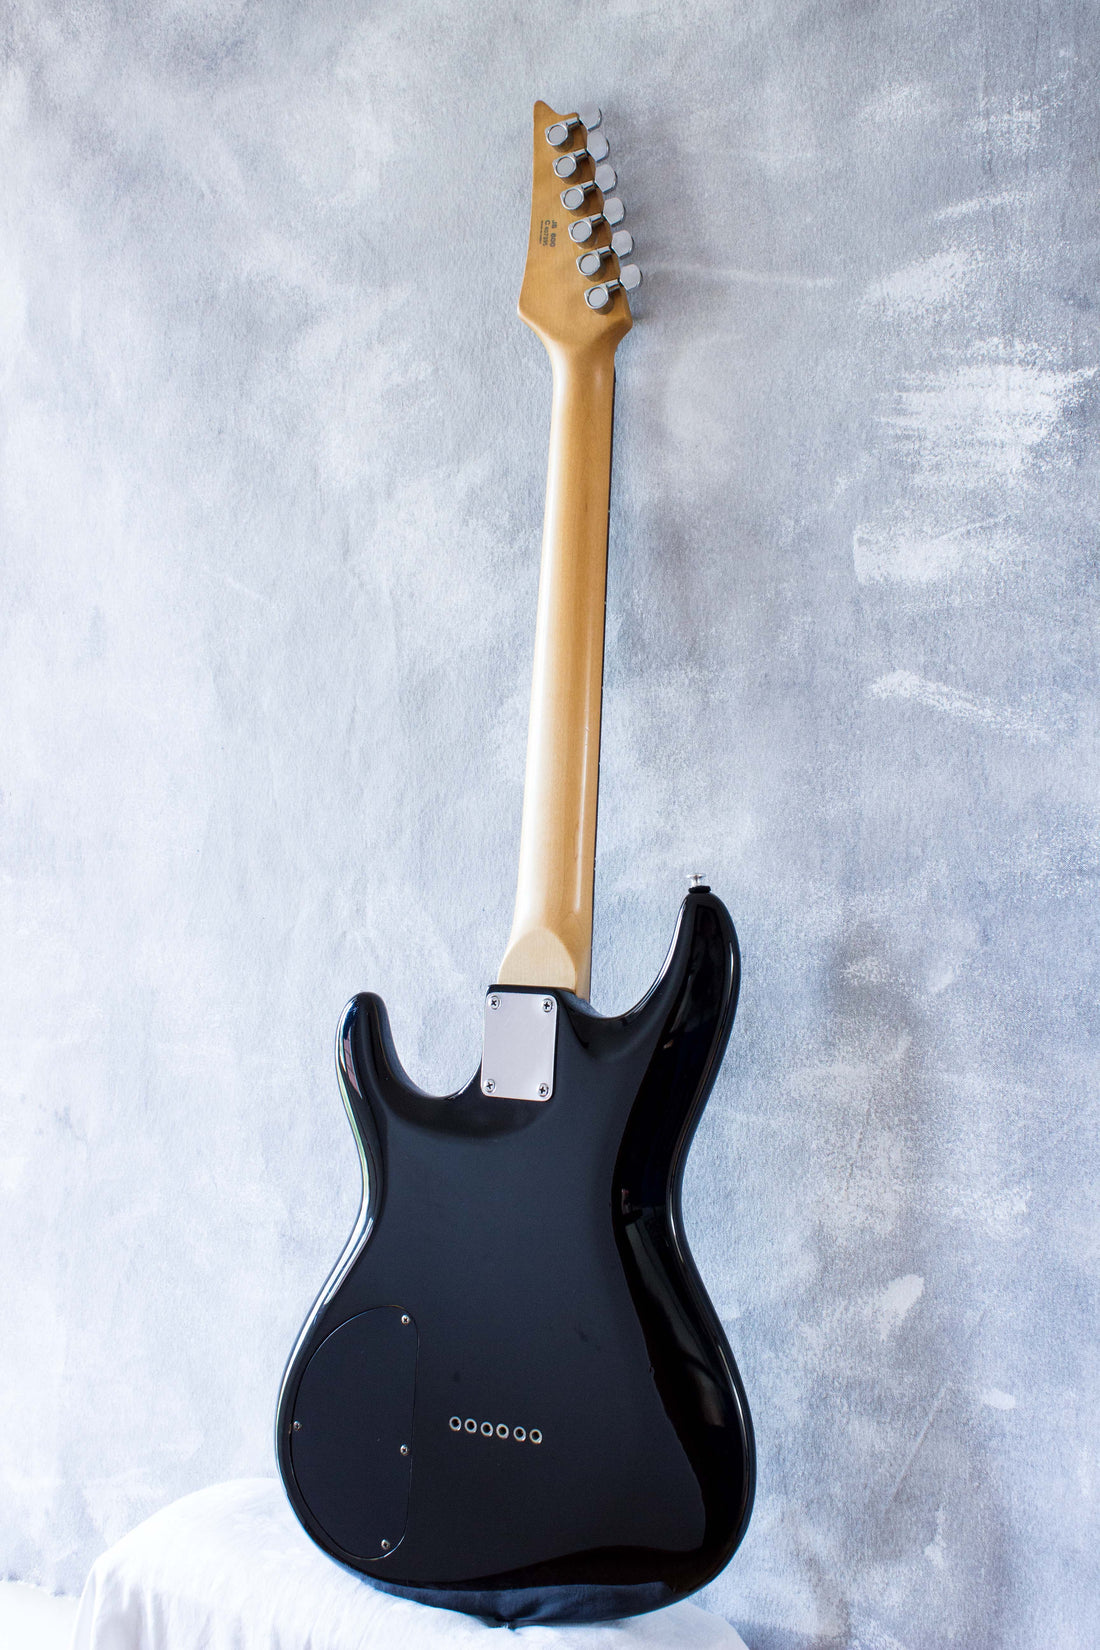 Ibanez JS600 Joe Satriani Model Black 1994